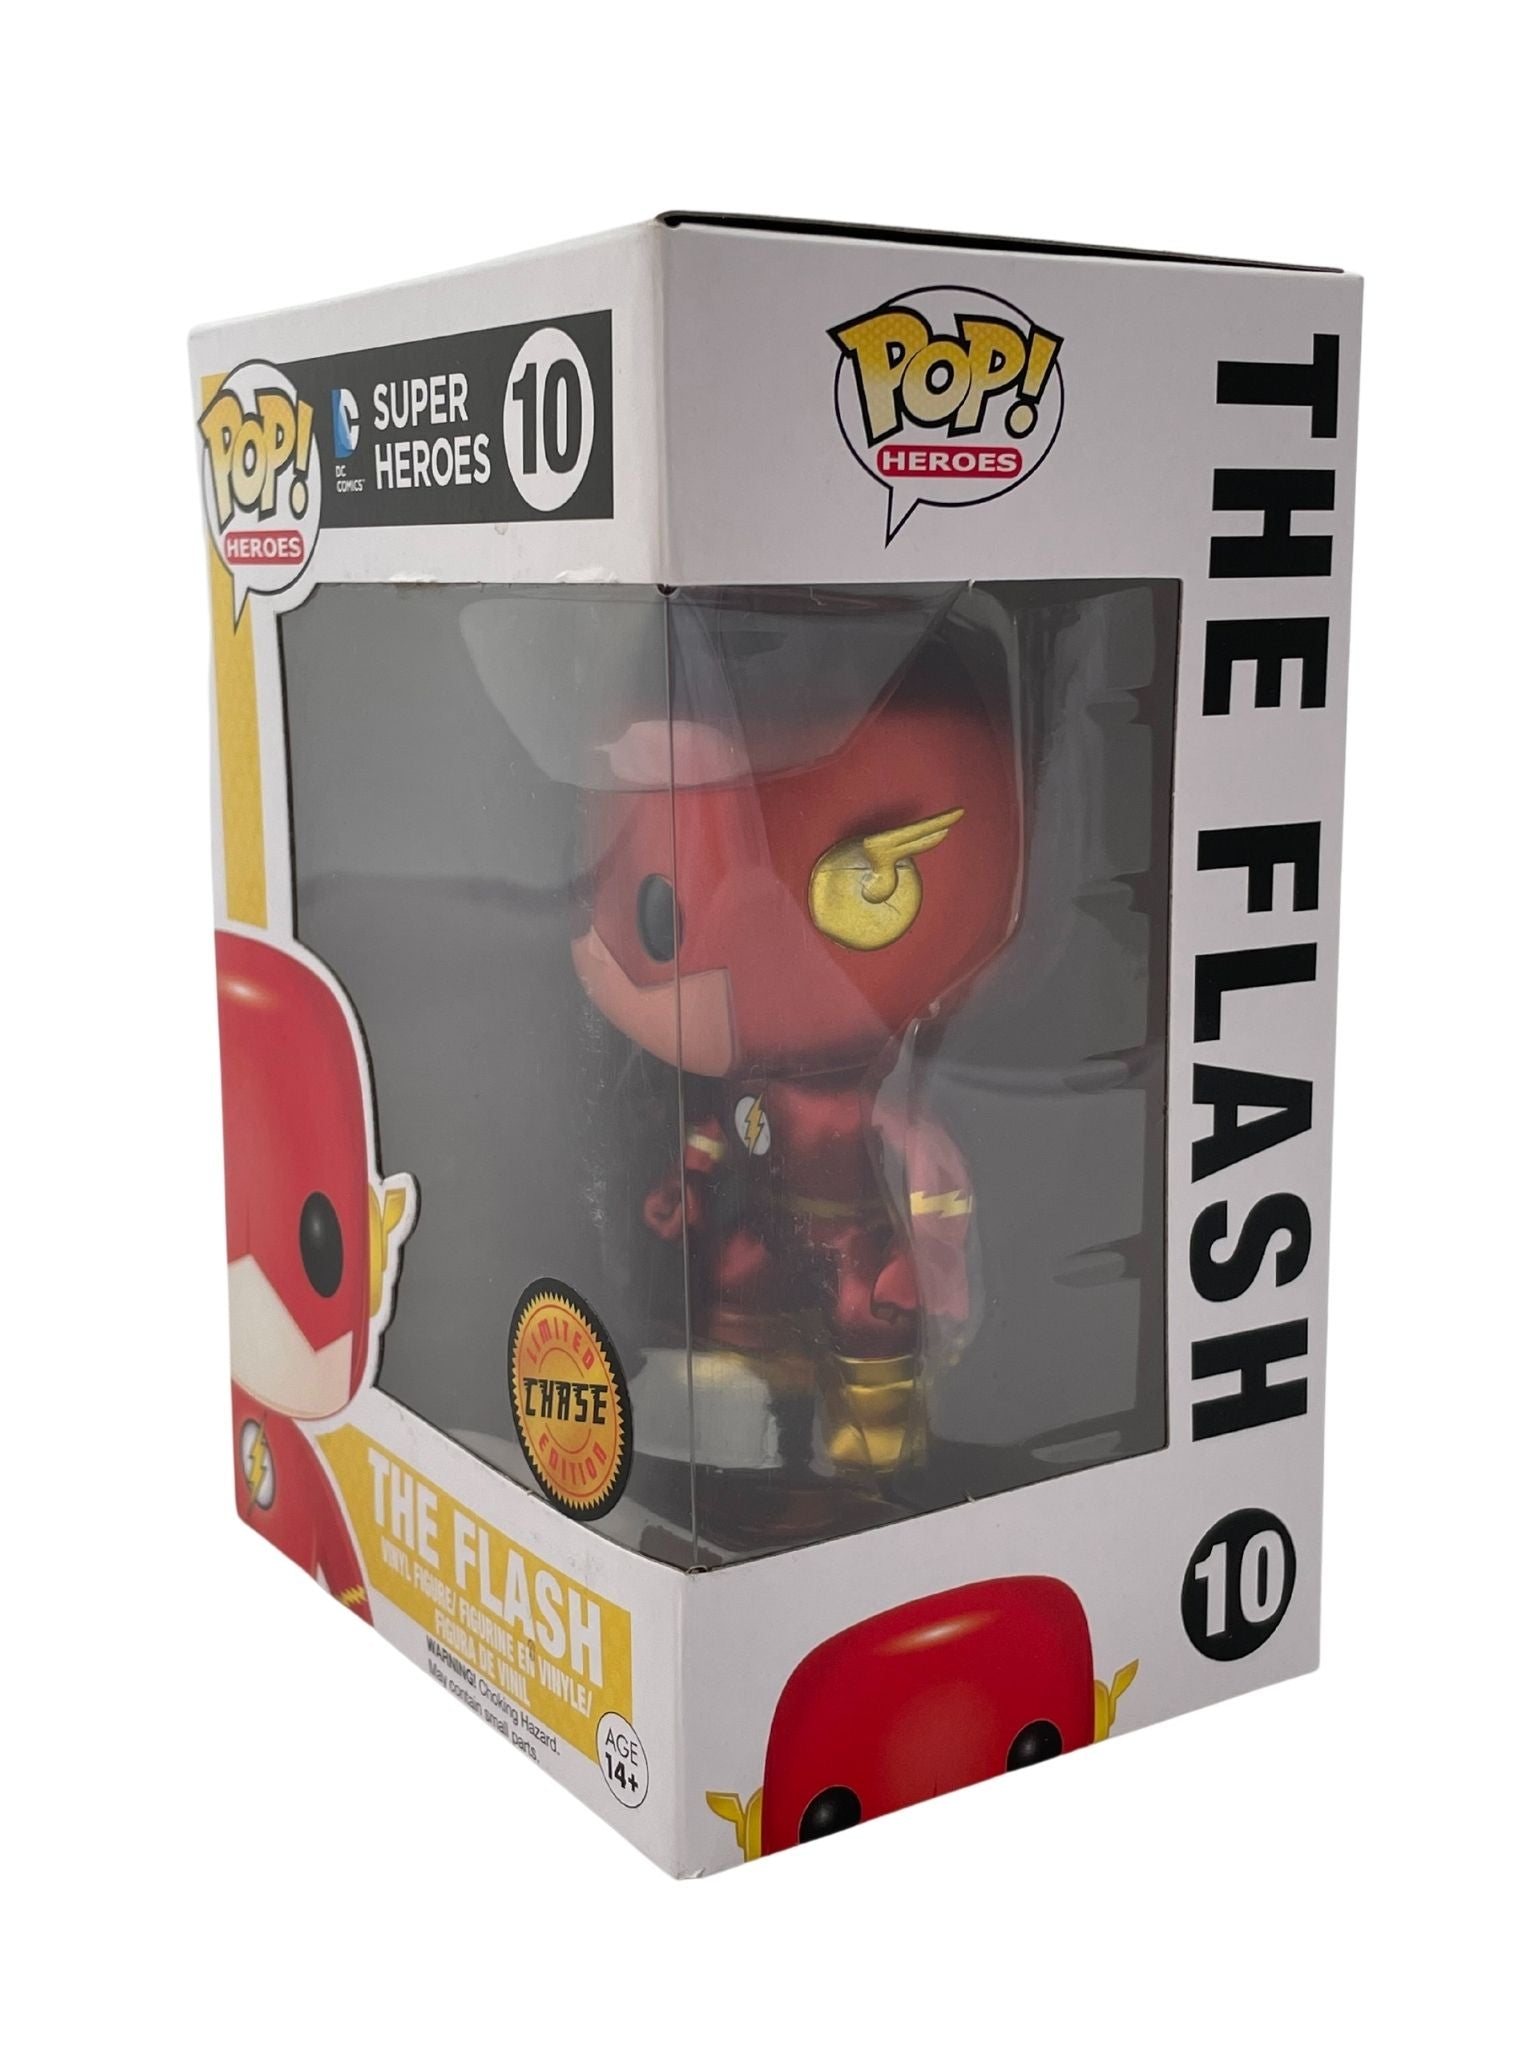 Funko Pop! Dc Comics The Flash